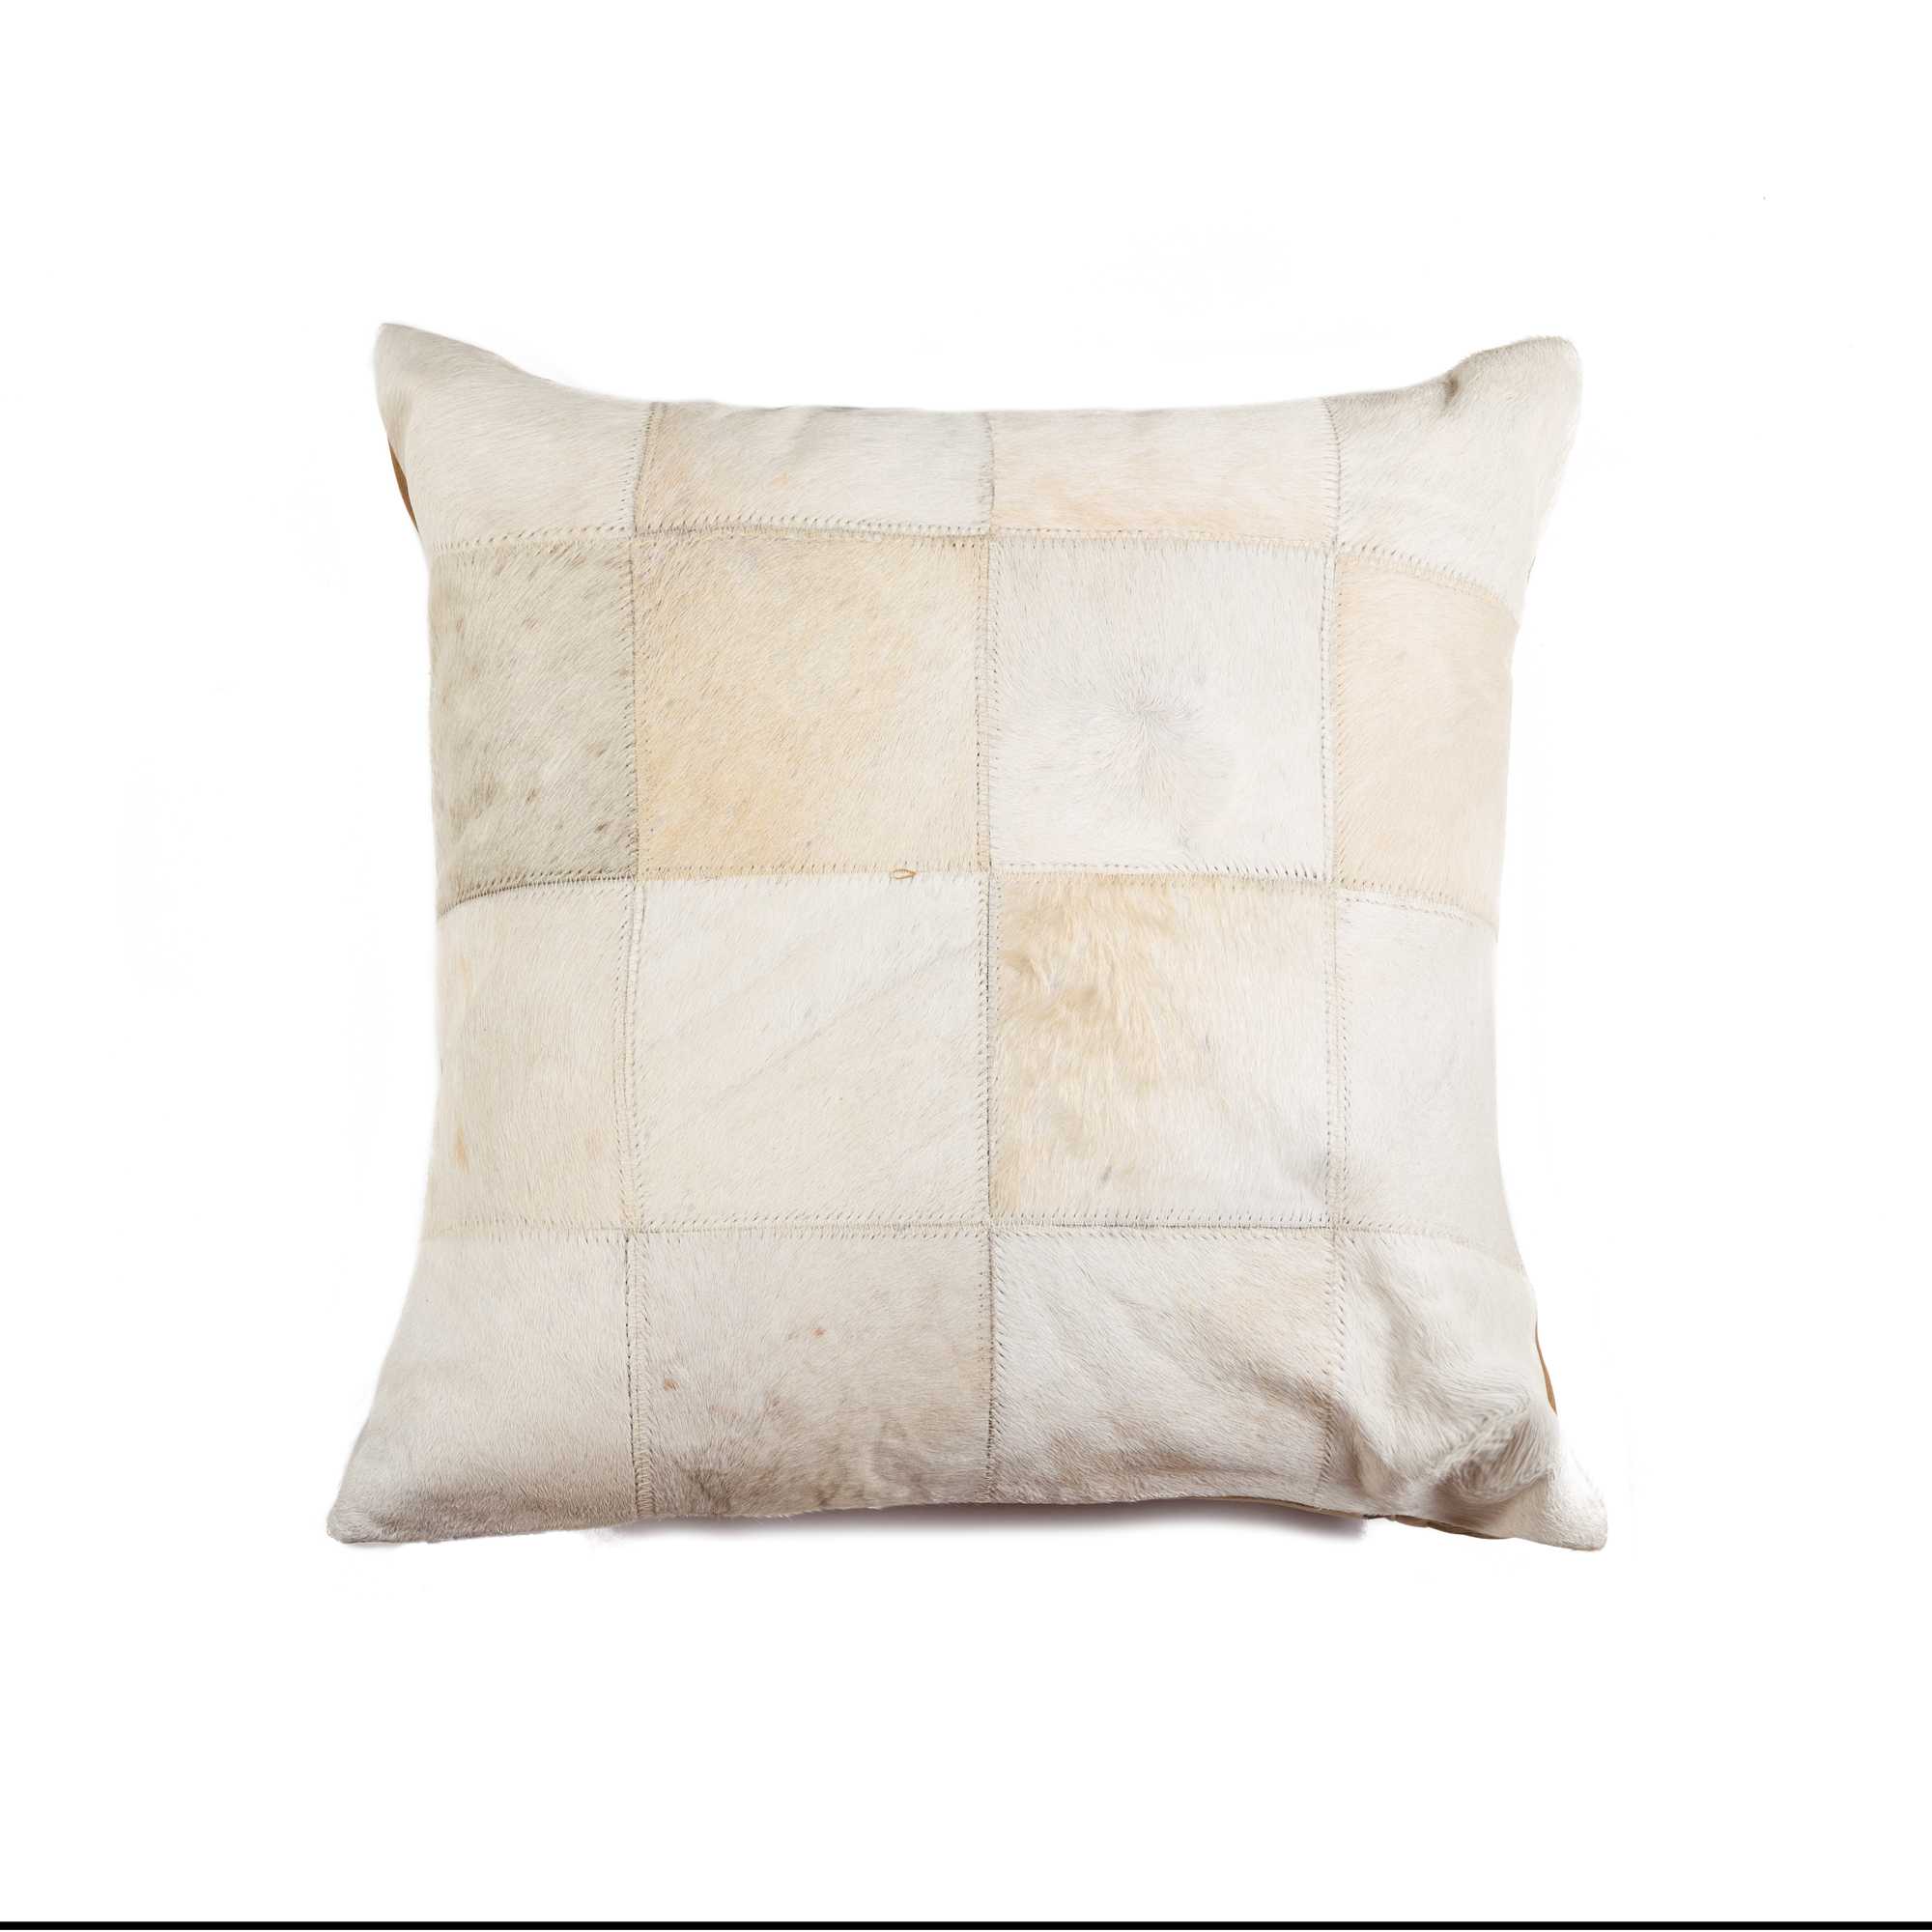 18" x 18" x 5" Classy Natural Torino Kobe Patchwork - Pillow